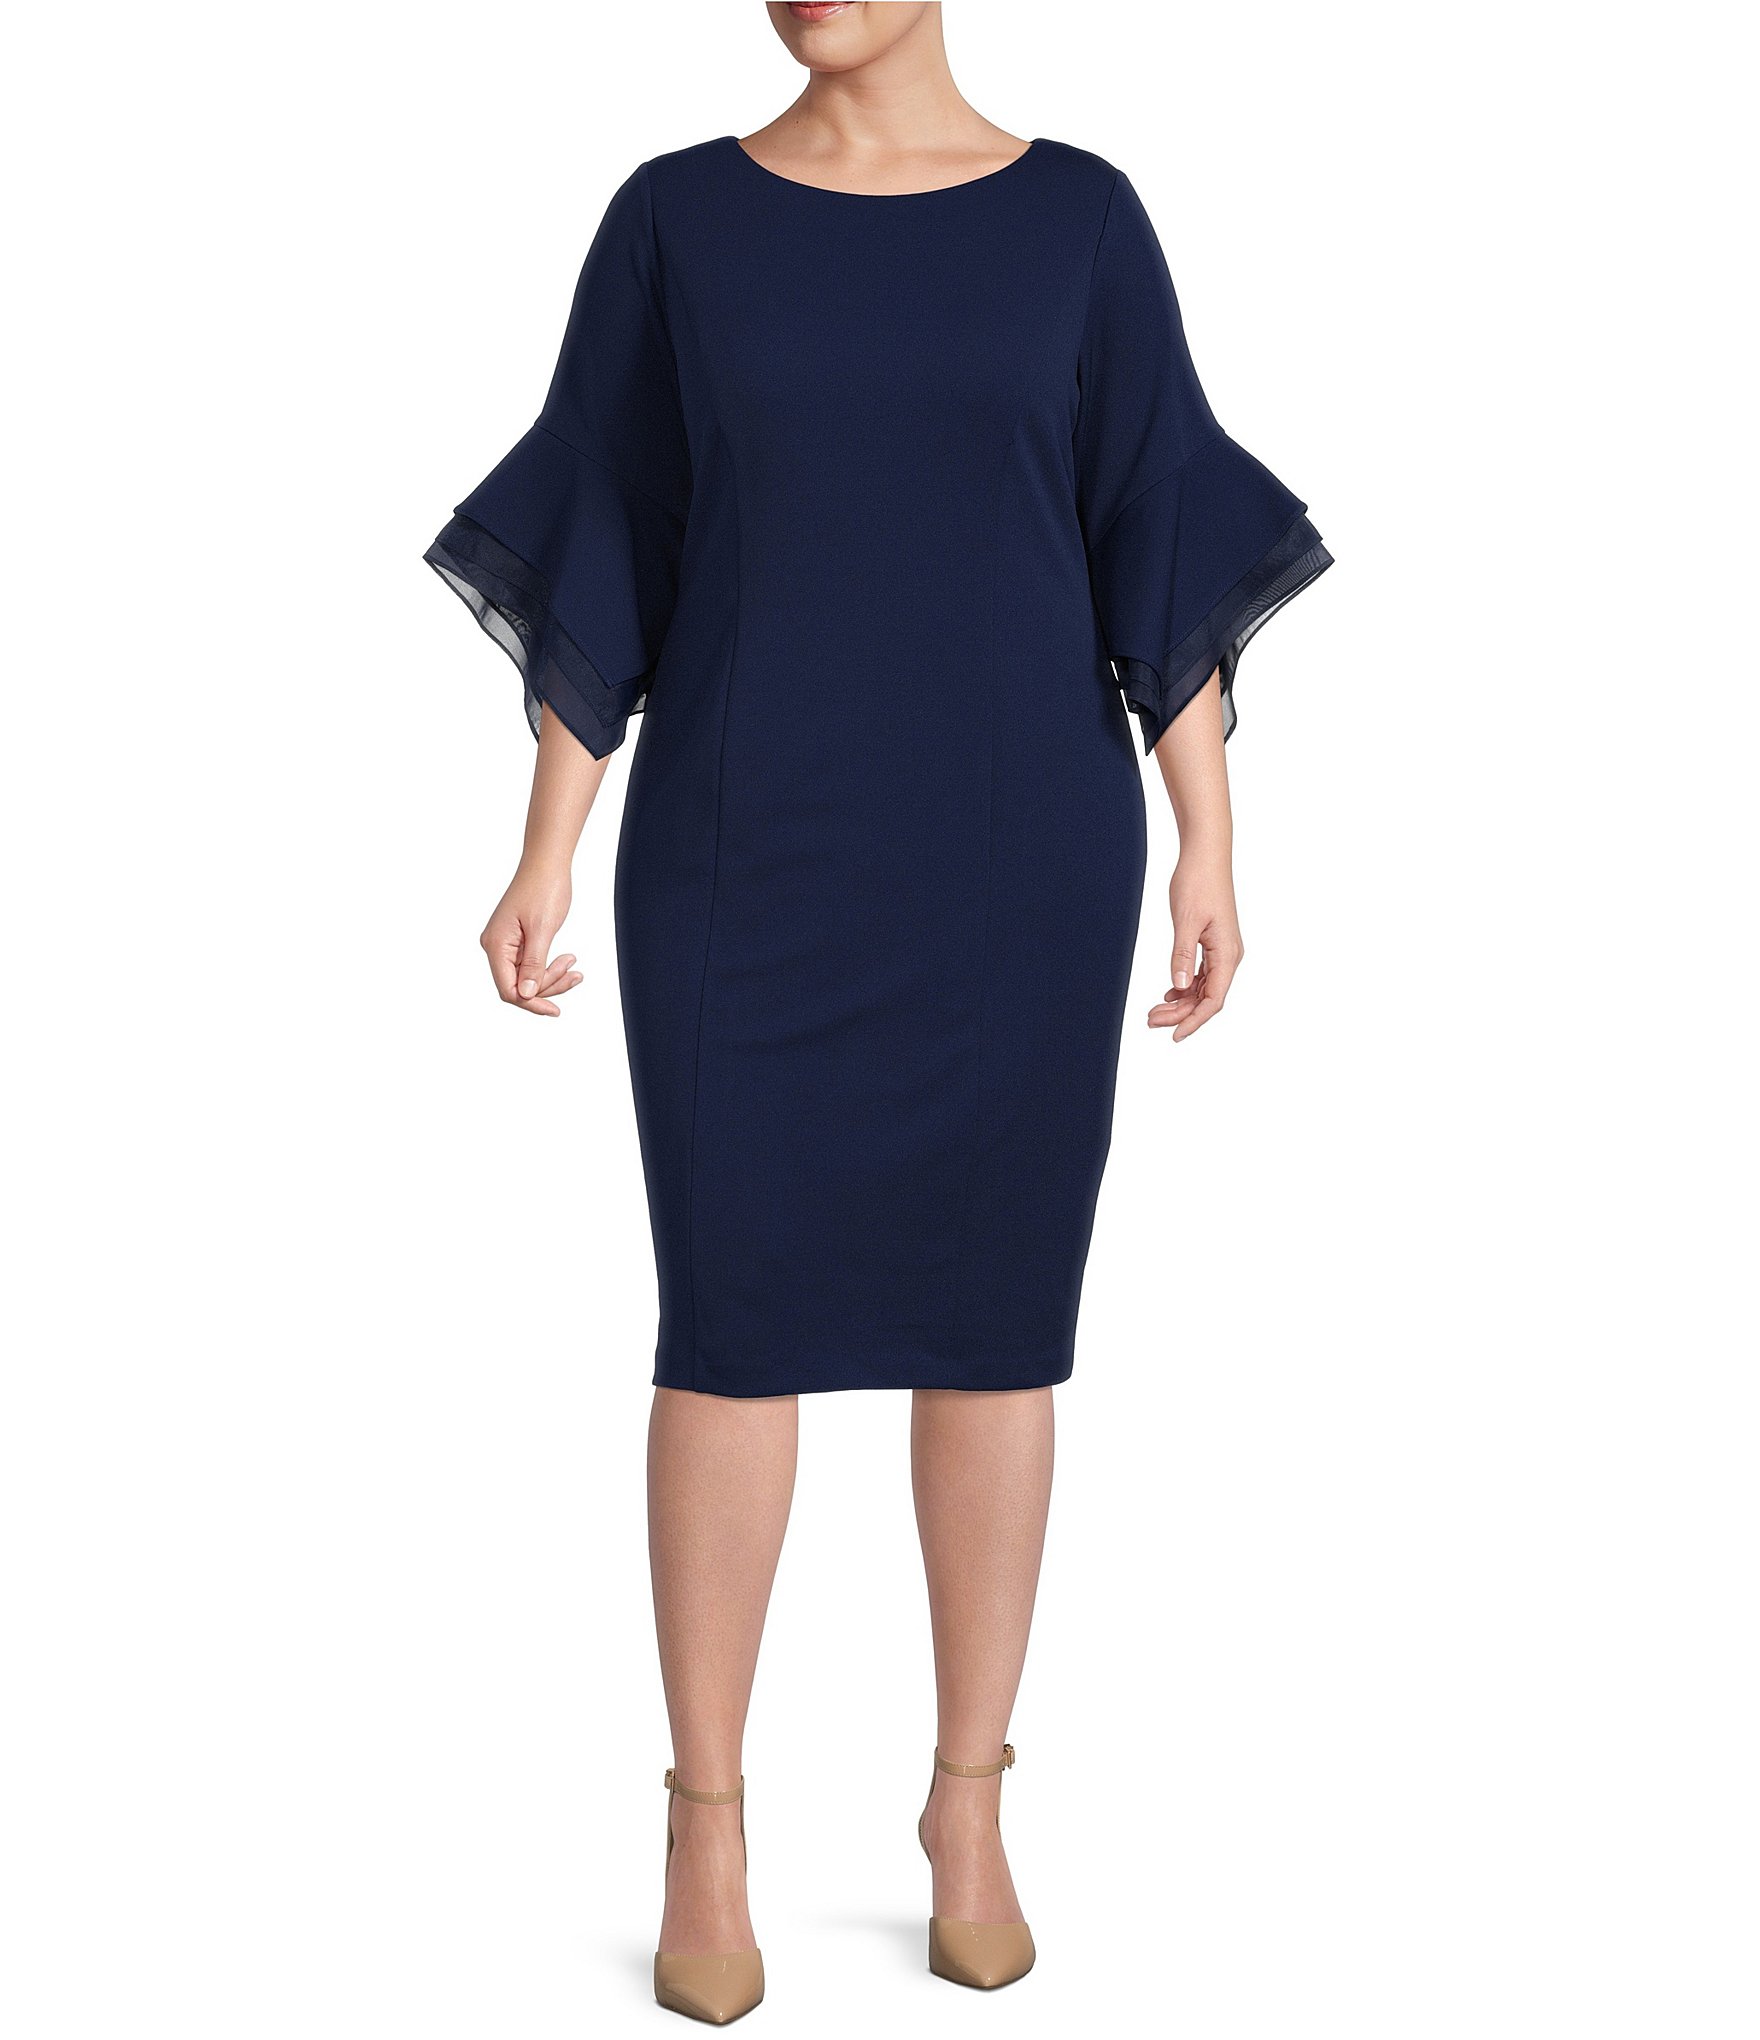 bell sleeve dress: Women's Plus Size Clothing